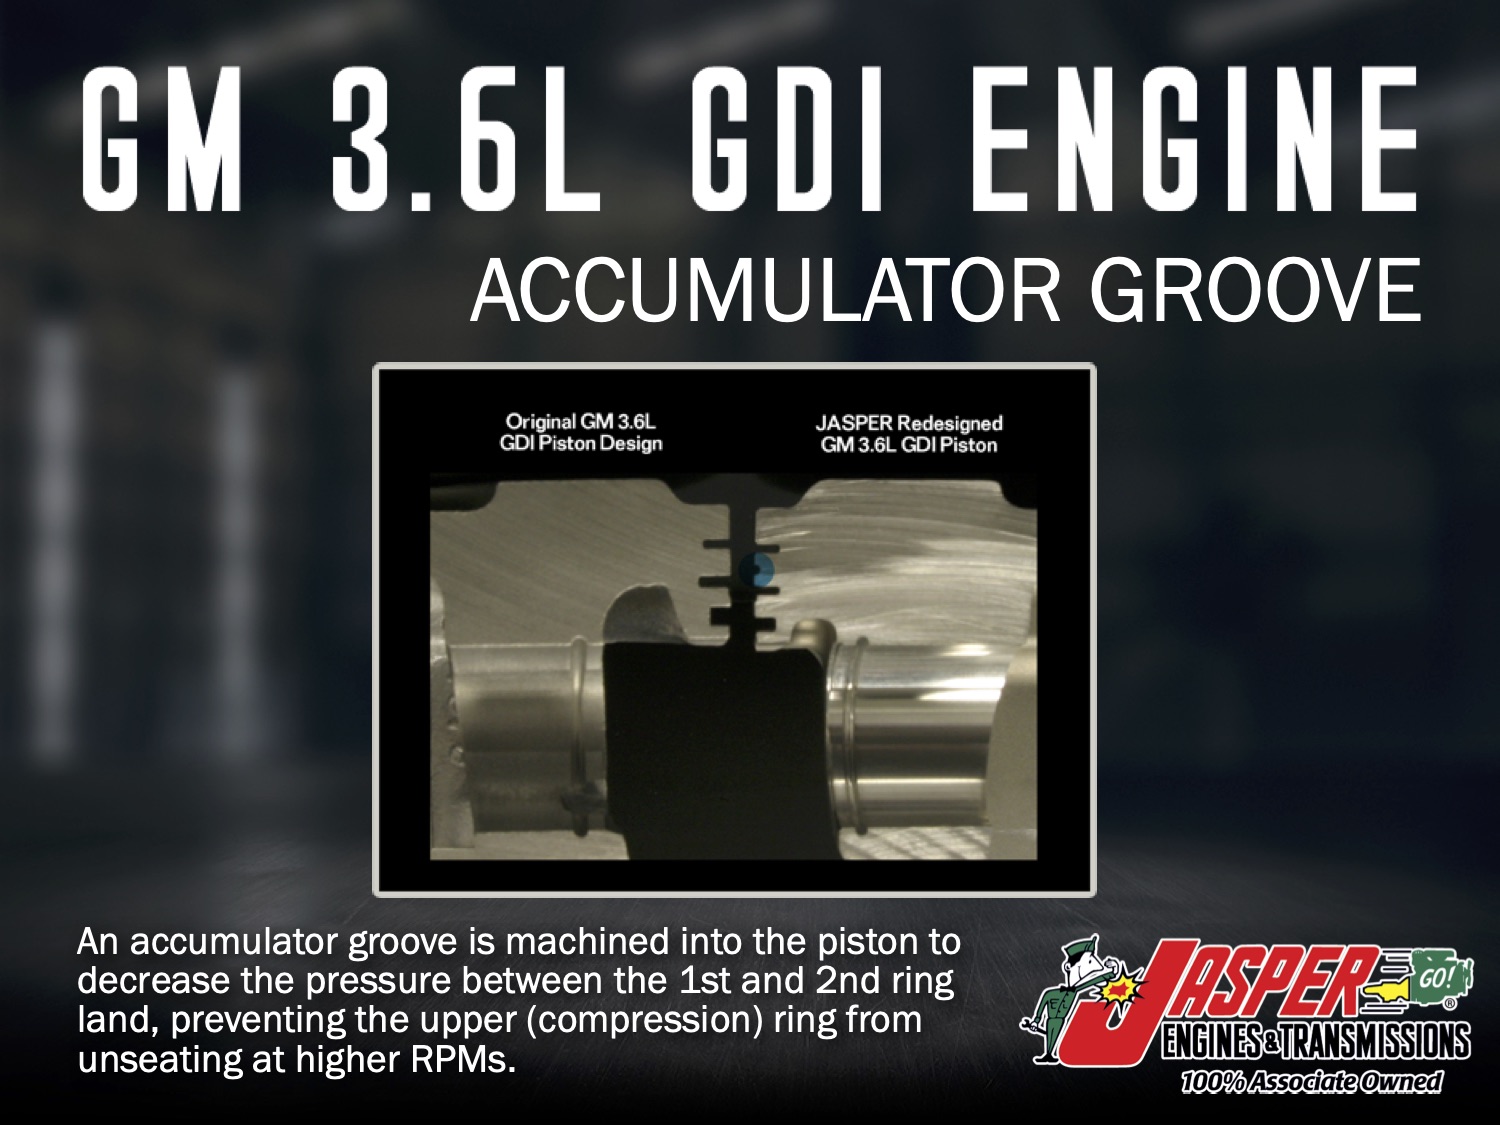 GM 3.6L GDI Engines